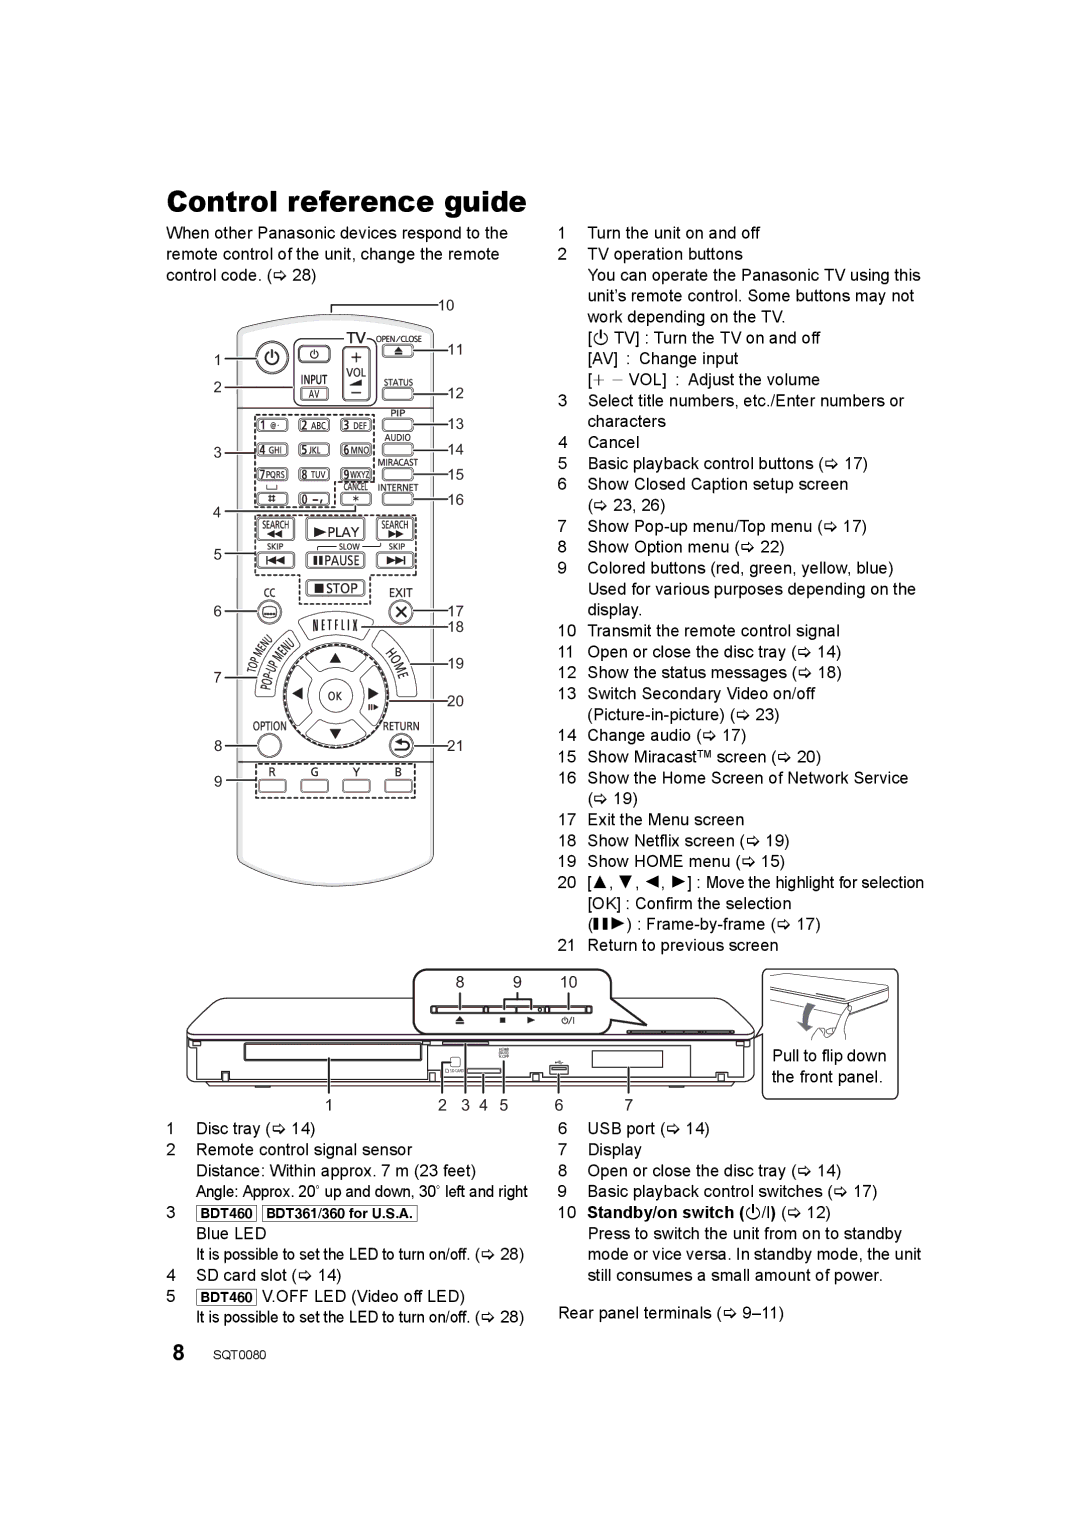 Panasonic DMP-BDT360, DMP-BDT361, DMP-BDT460 owner manual Control reference guide, Standby/on switch Í/I 